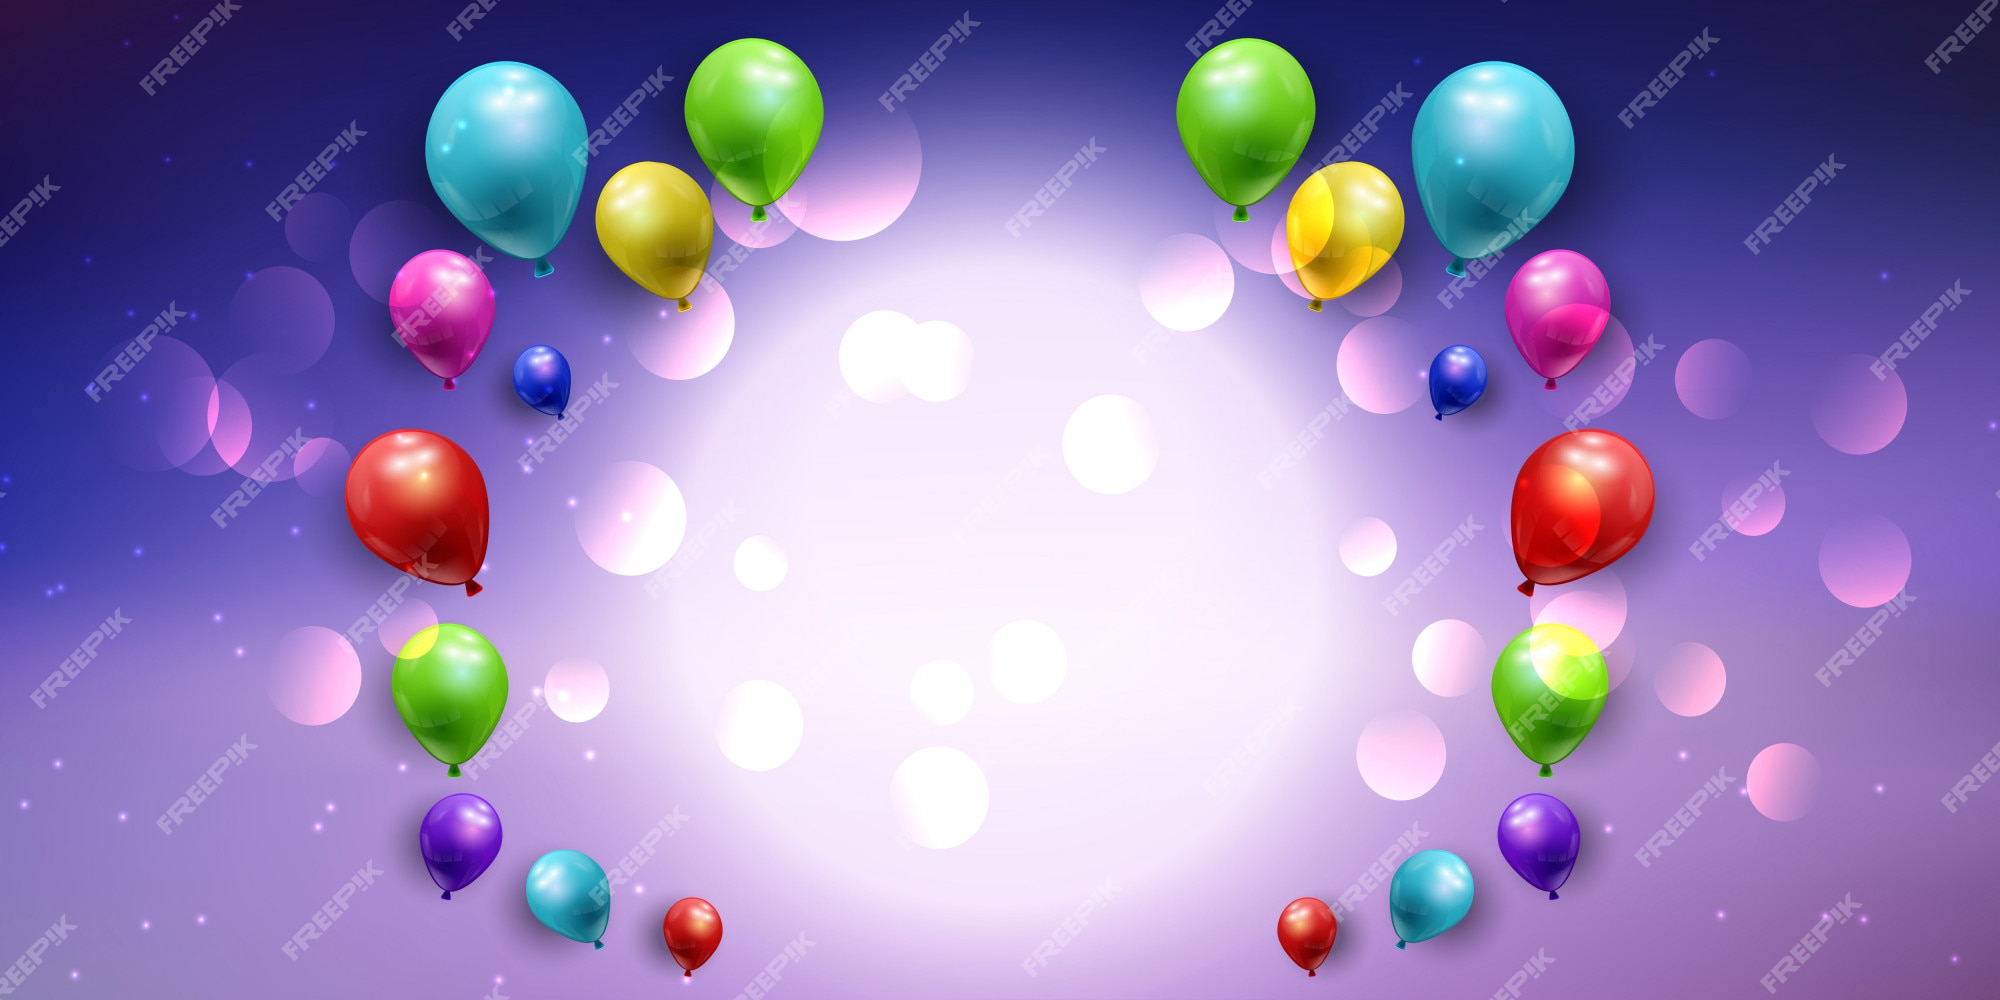 Free Vector | Balloon banner with bokeh lights